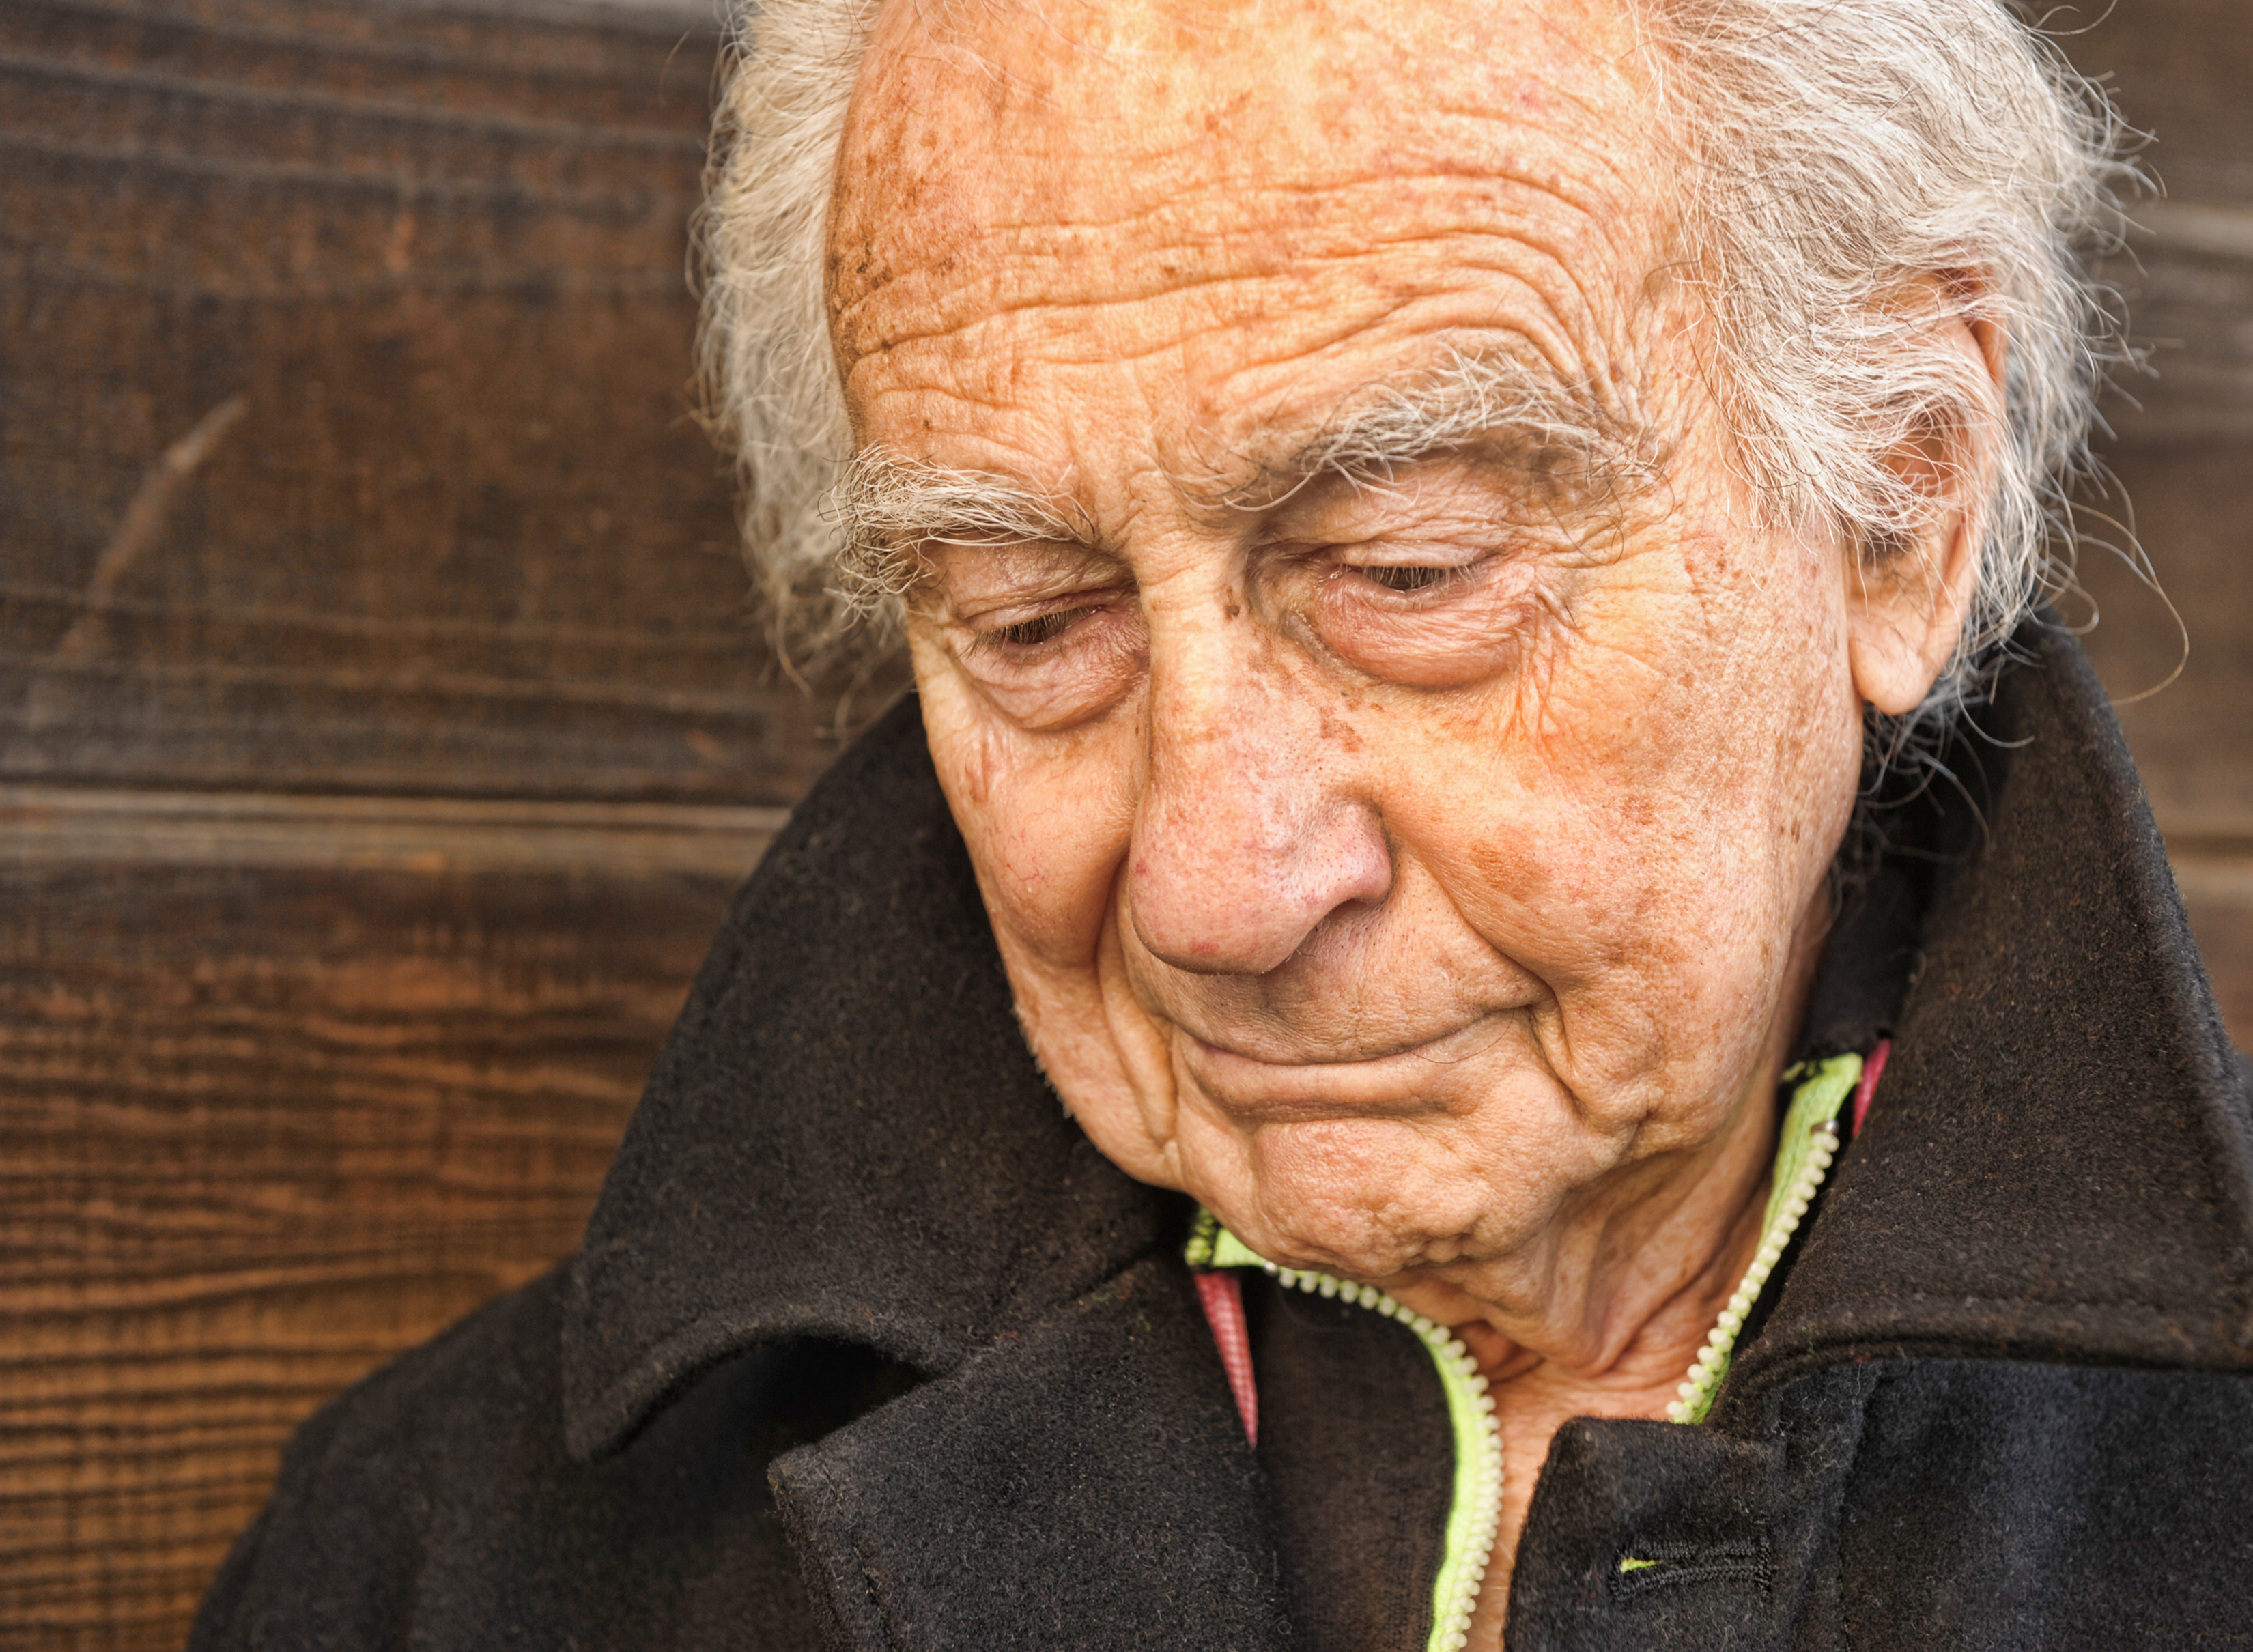 Old man | Source: Shutterstock